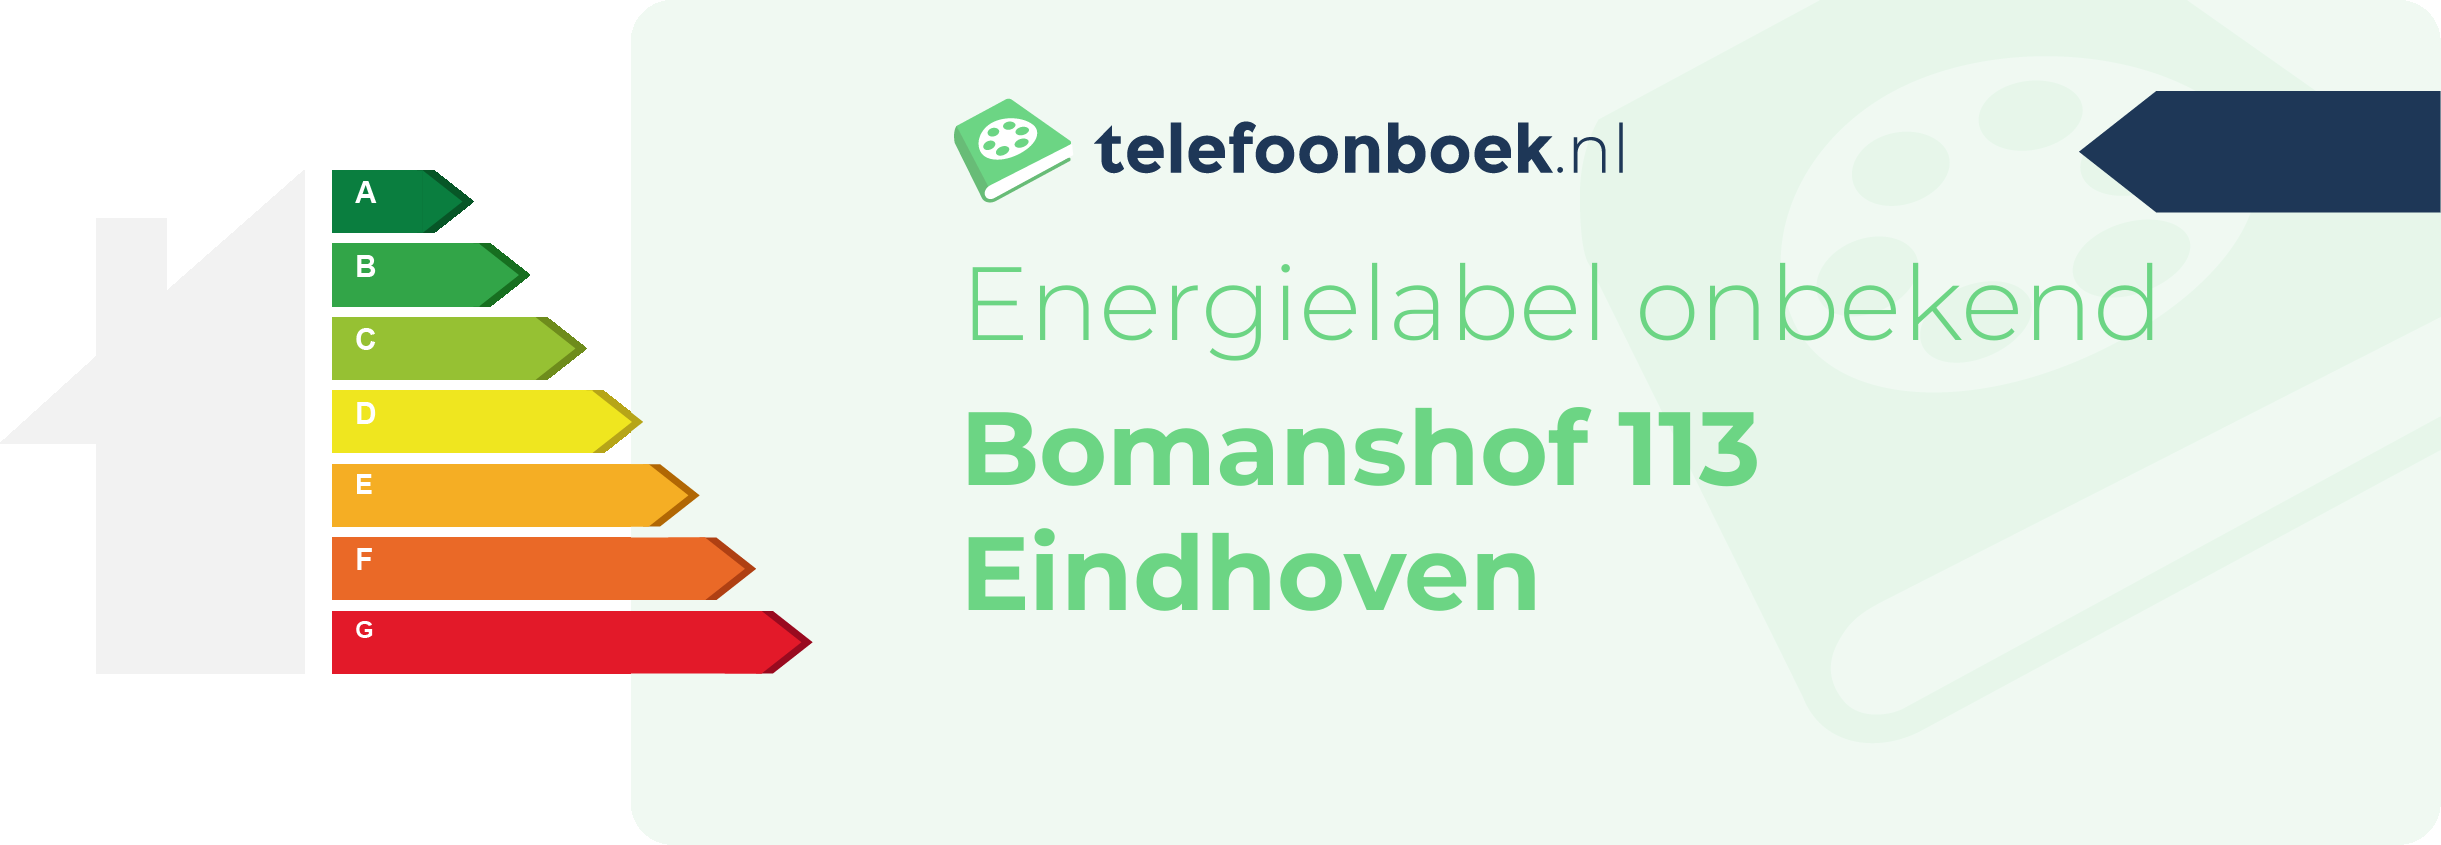 Energielabel Bomanshof 113 Eindhoven